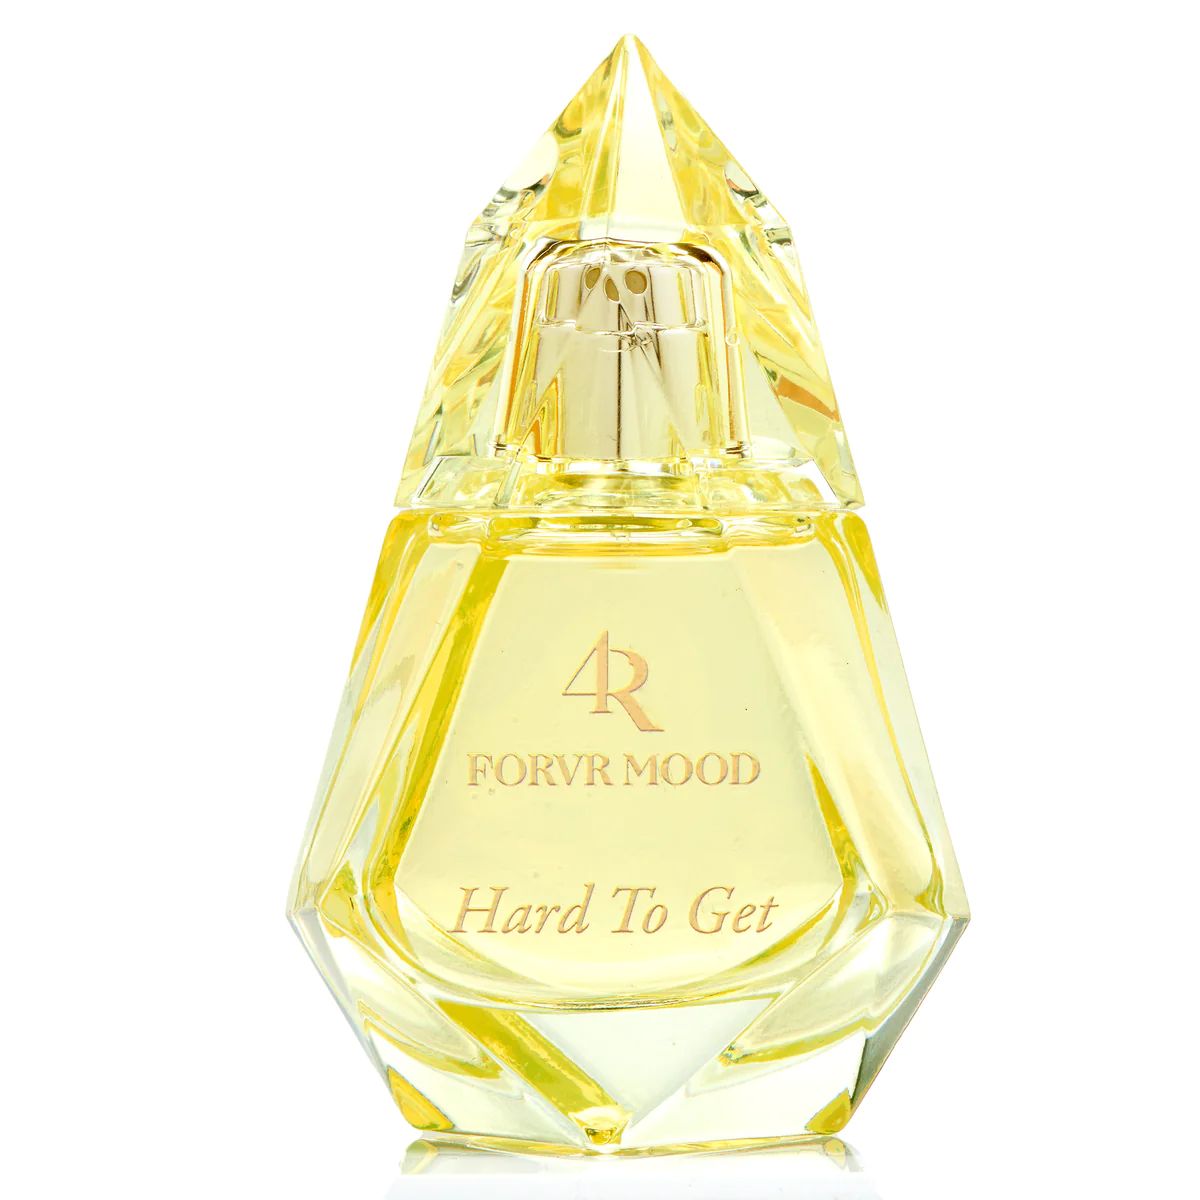 HARD TO GET Eau de Parfum | FORVR Mood